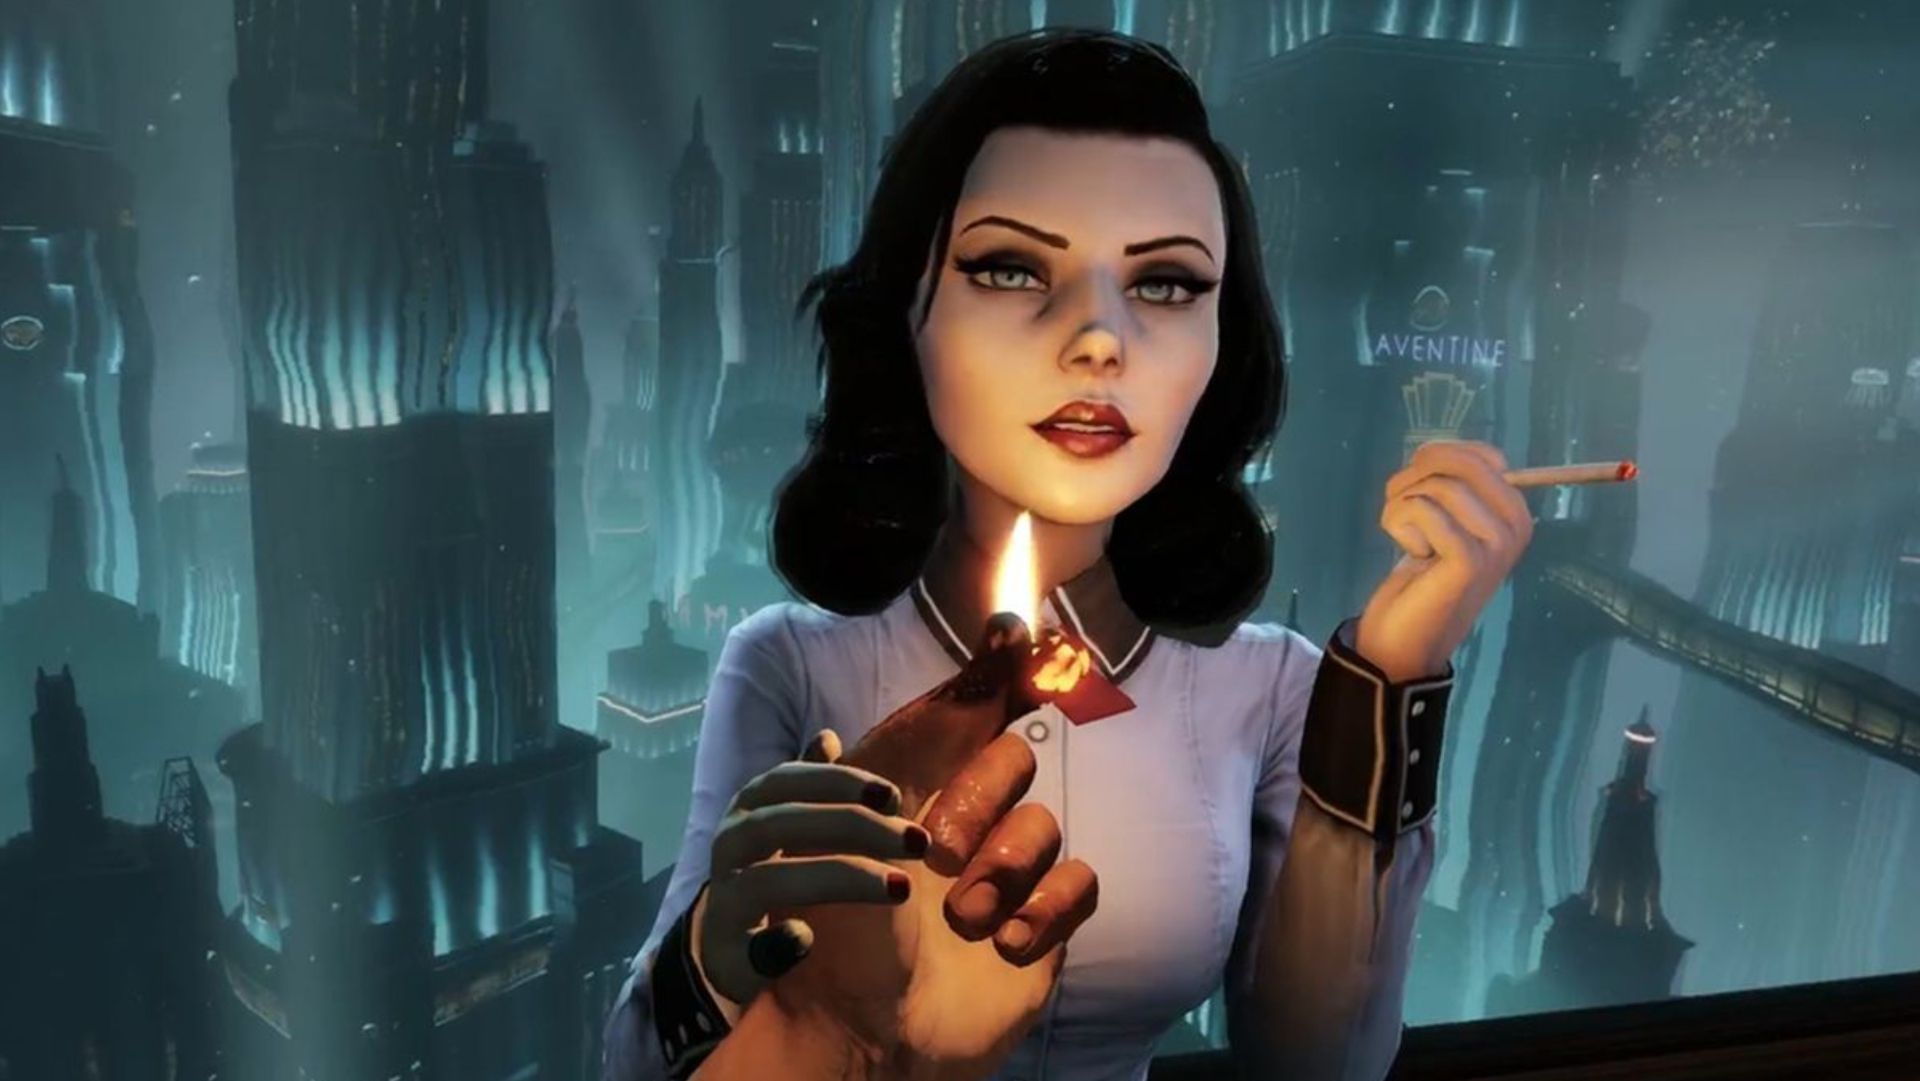 Elizabeth lighting her cigarette in BioShock Infinite.